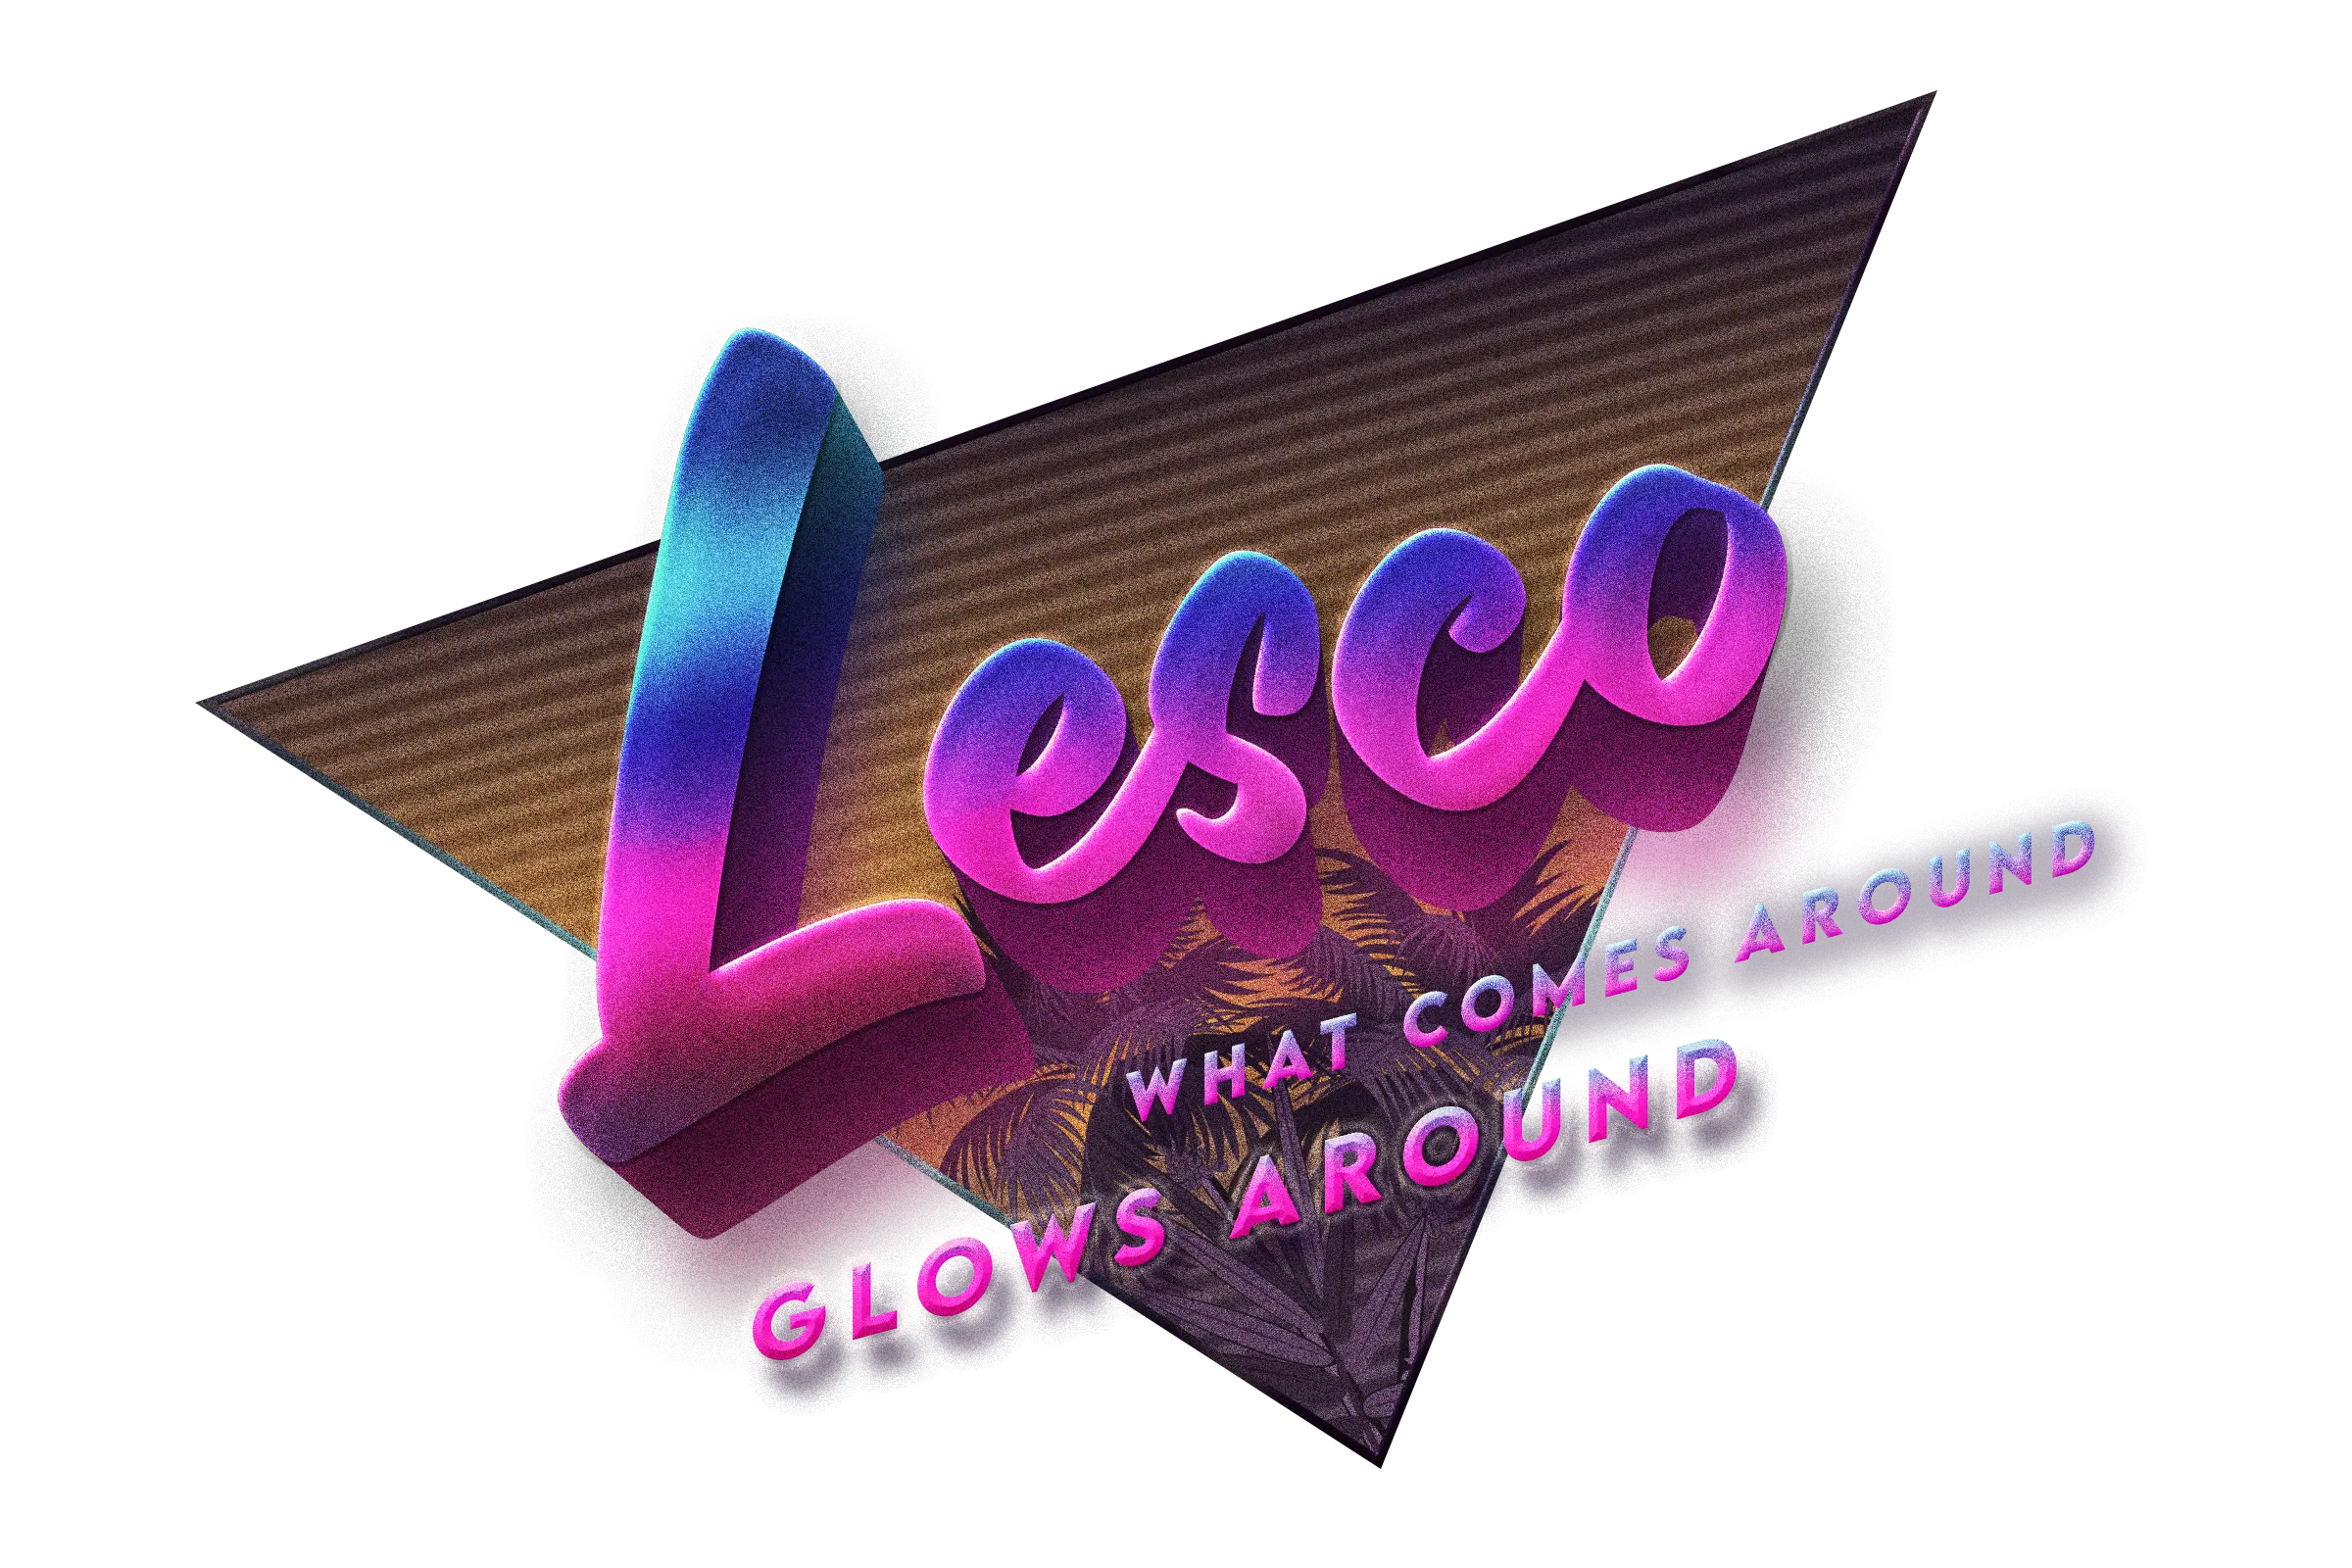 Logo partycoverband Lesco